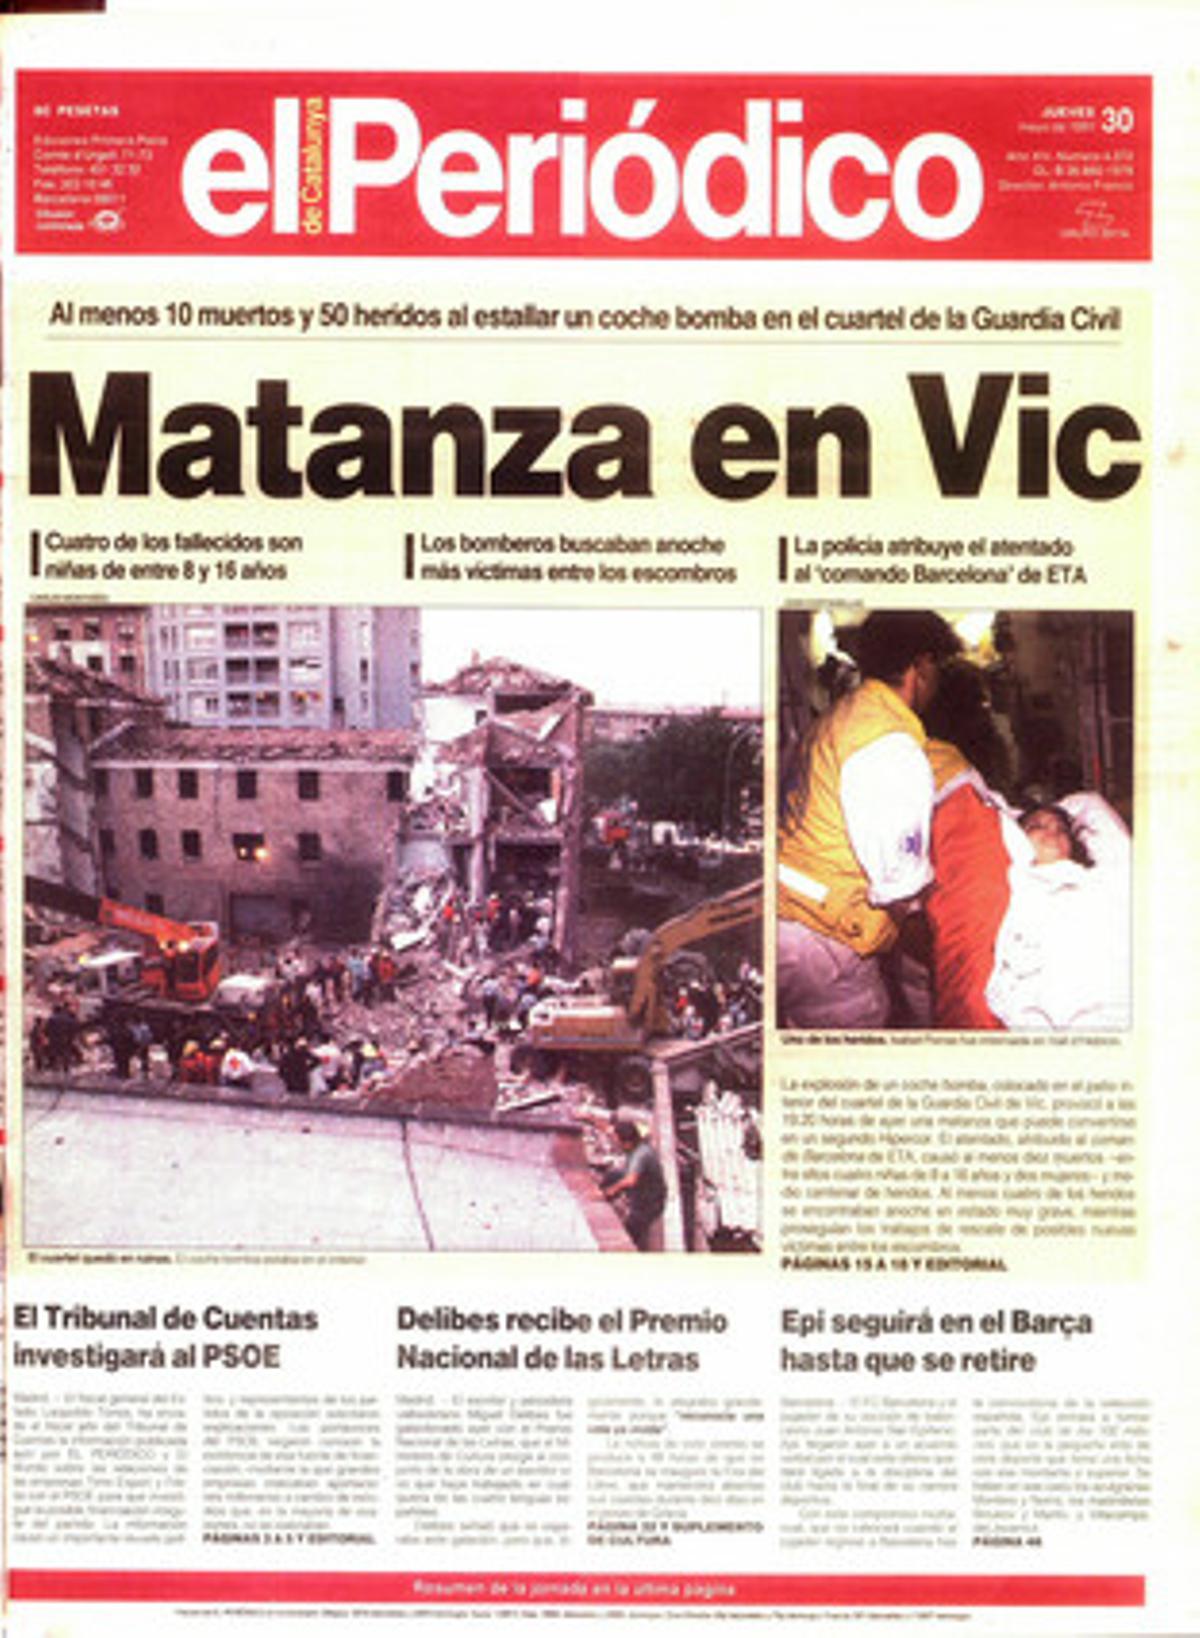 Matanza en Vic al estallar un coche bomba frente al cuartel de la Guardia Civil. 30/5/1991